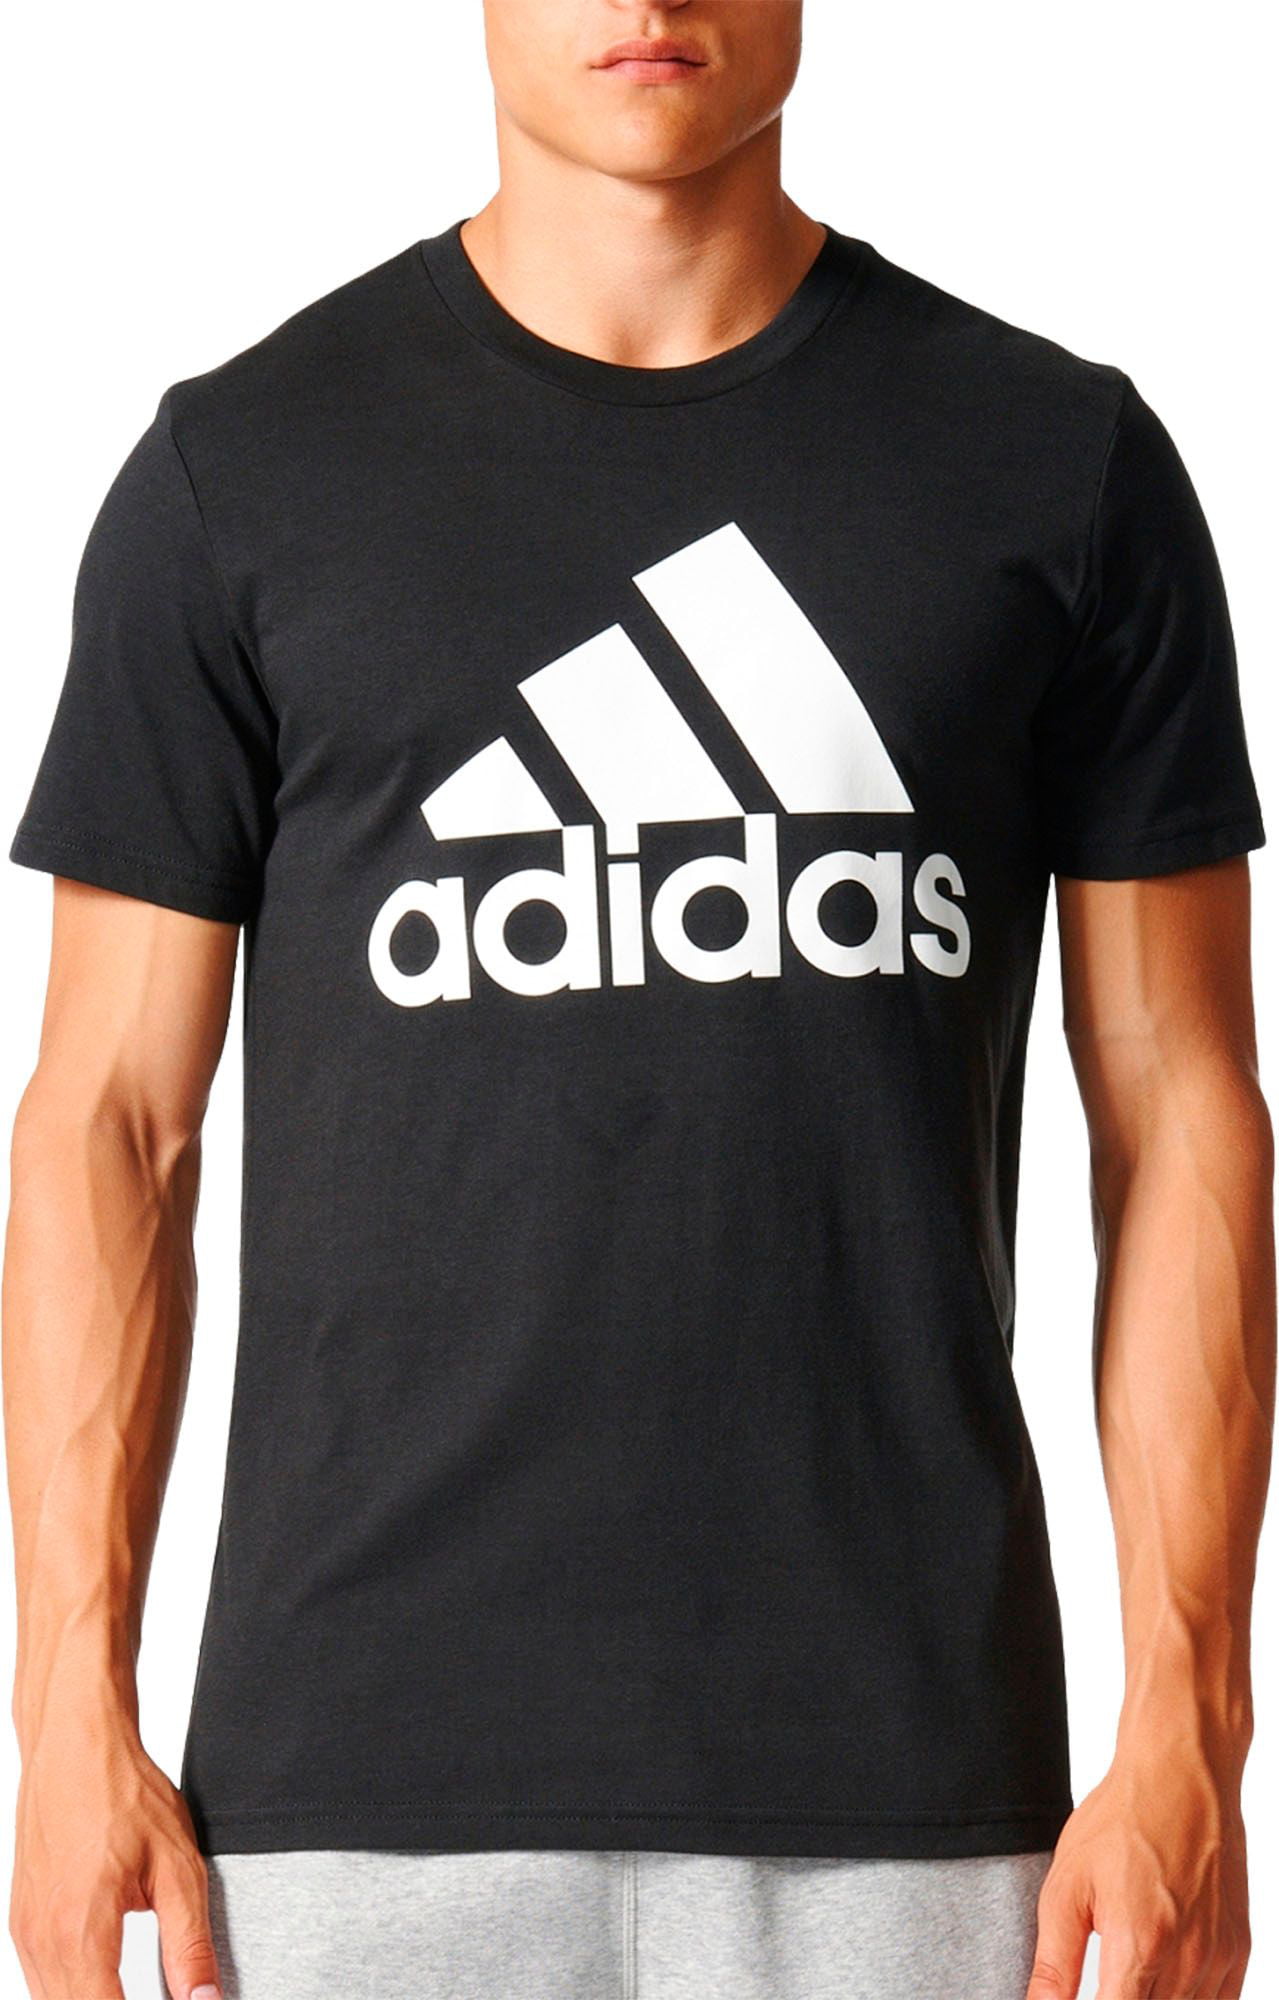 Adidas - adidas Men's Badge Of Sport Classic T-Shirt - Walmart.com ...